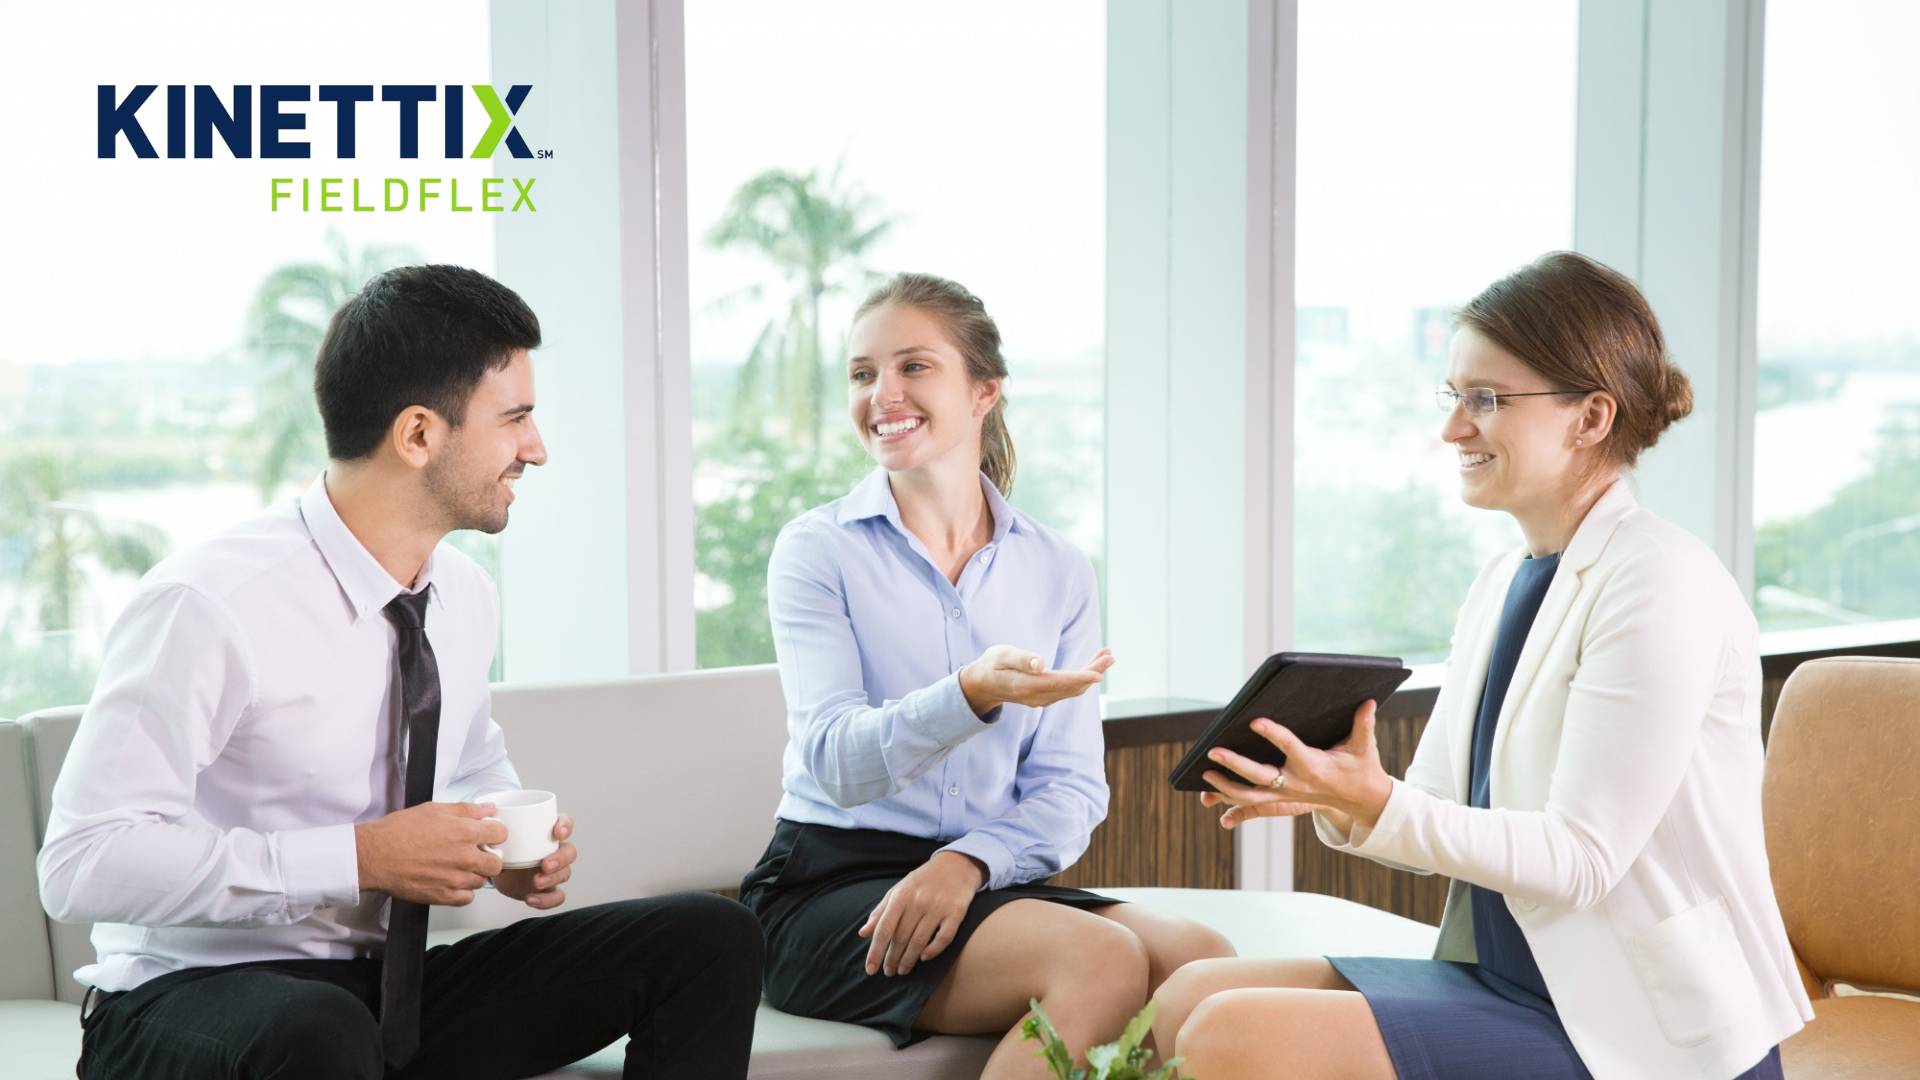 "Kinettix Launches Staff Augmentation: Revolutionizing IT Talent Access and Flexibility"